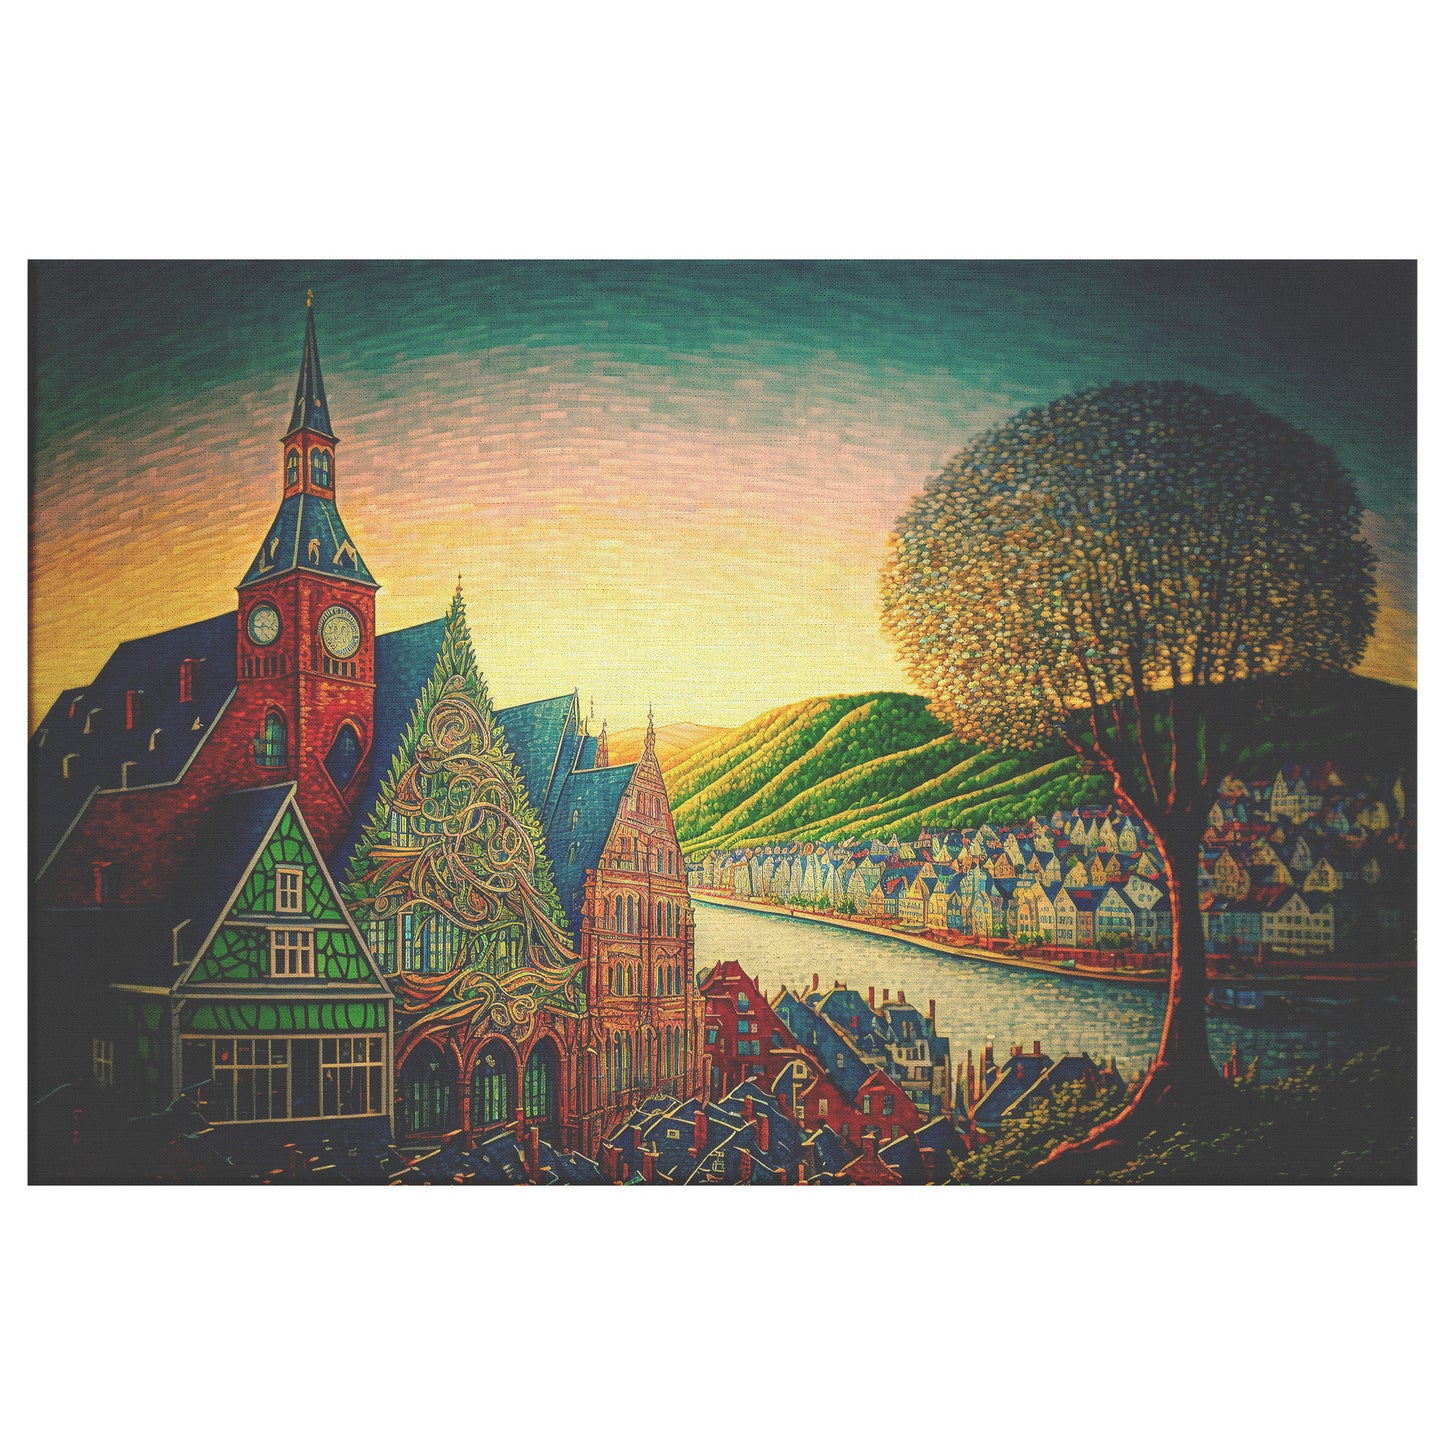 Rhine River Sunset Painting, Bacharach Germany Landscape Print, Midjourney AI Art